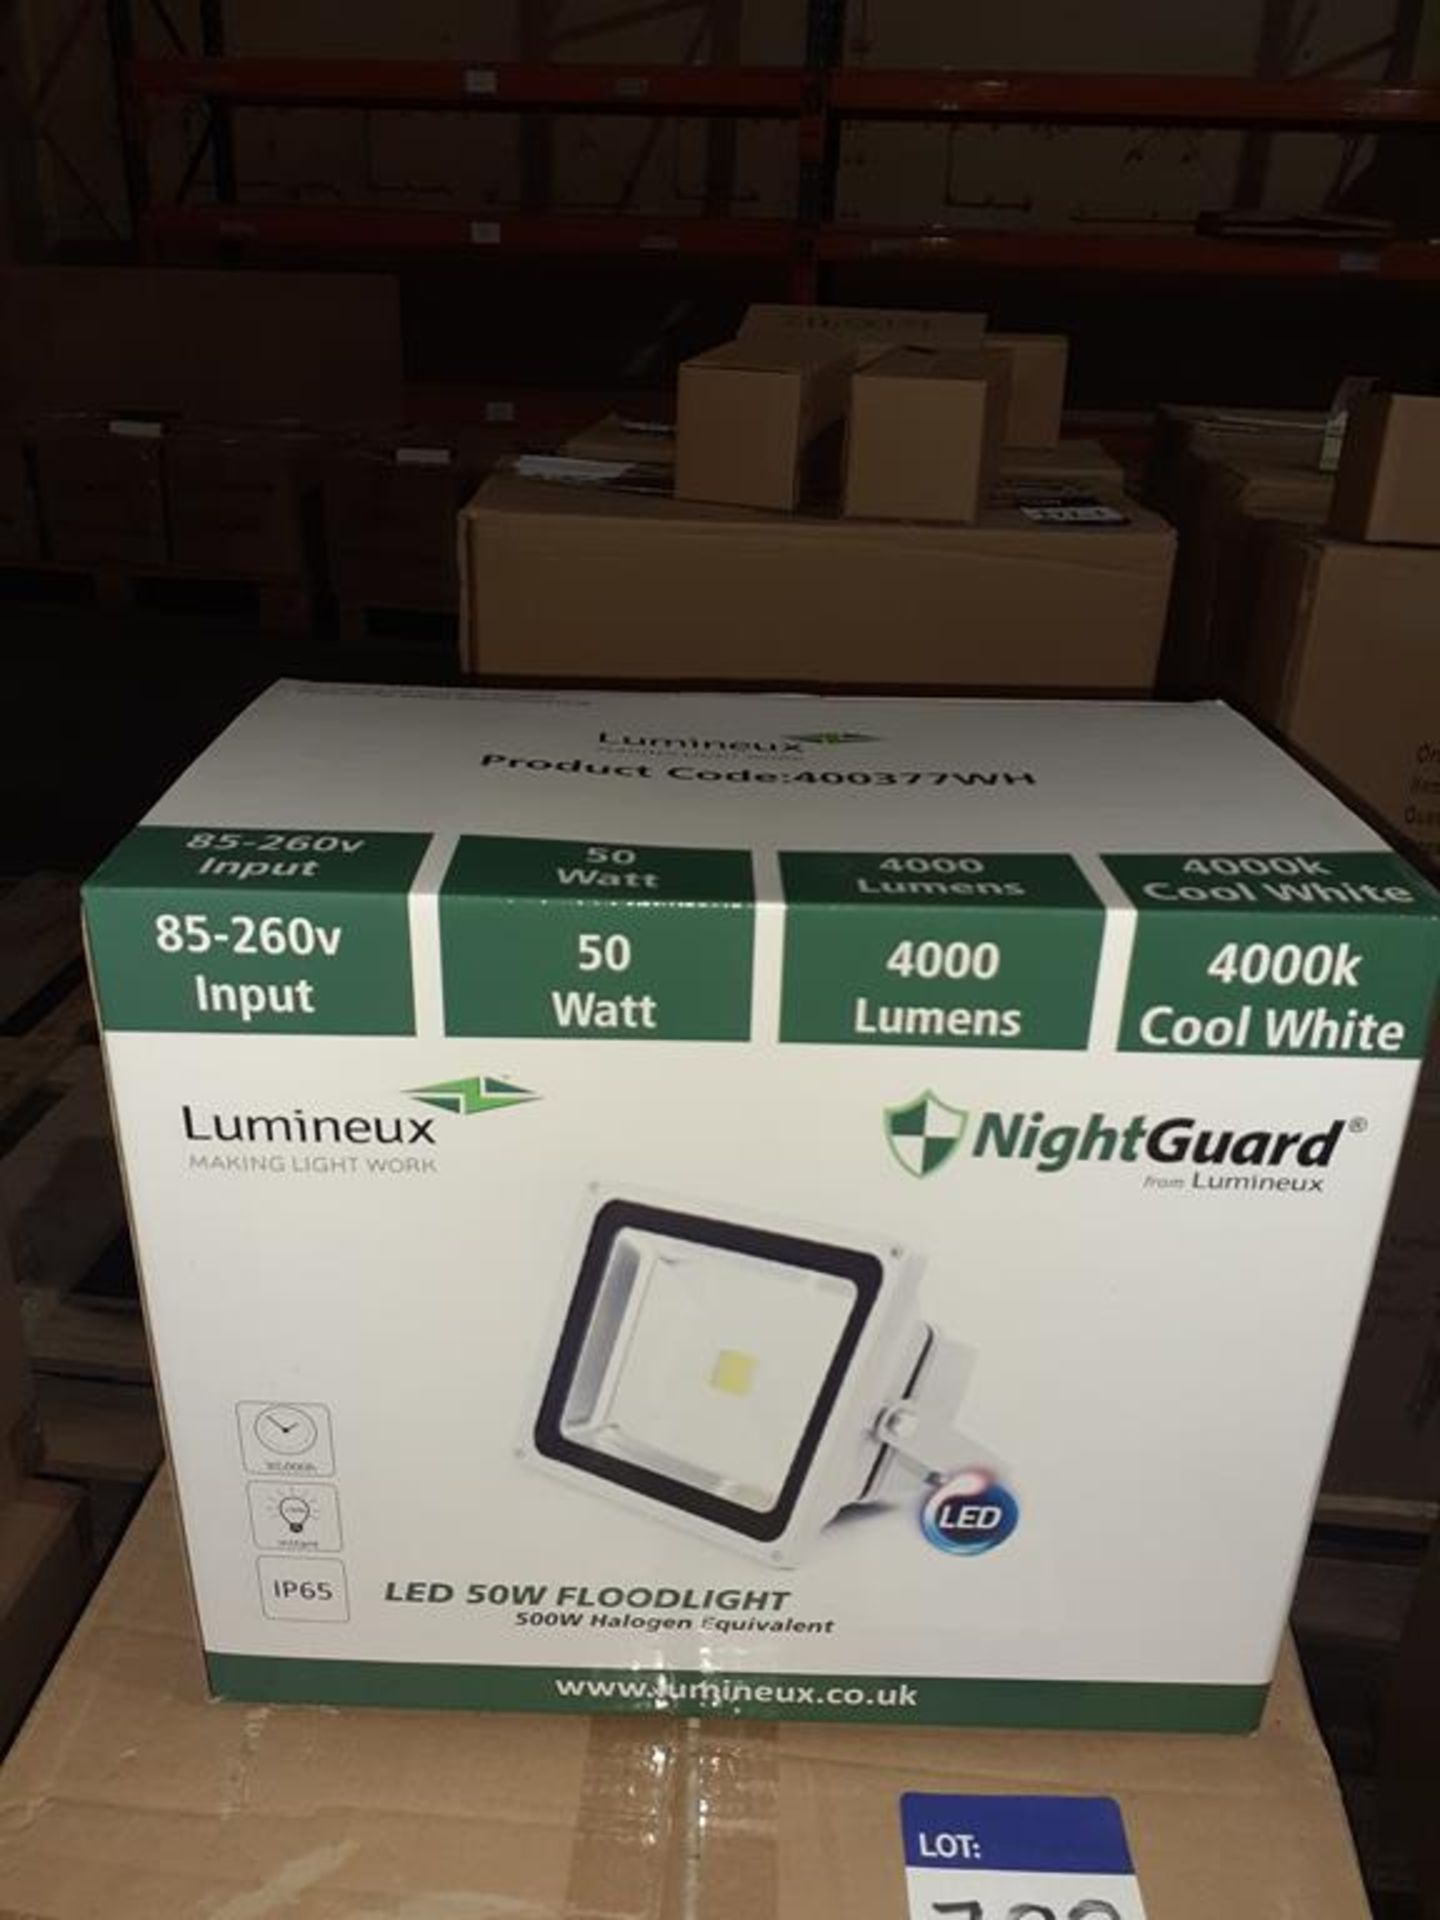 8 x LED 50W Floodlight 4000K 85-265V Input 4000 Lumens OEM Trade Price £169 - Image 3 of 3